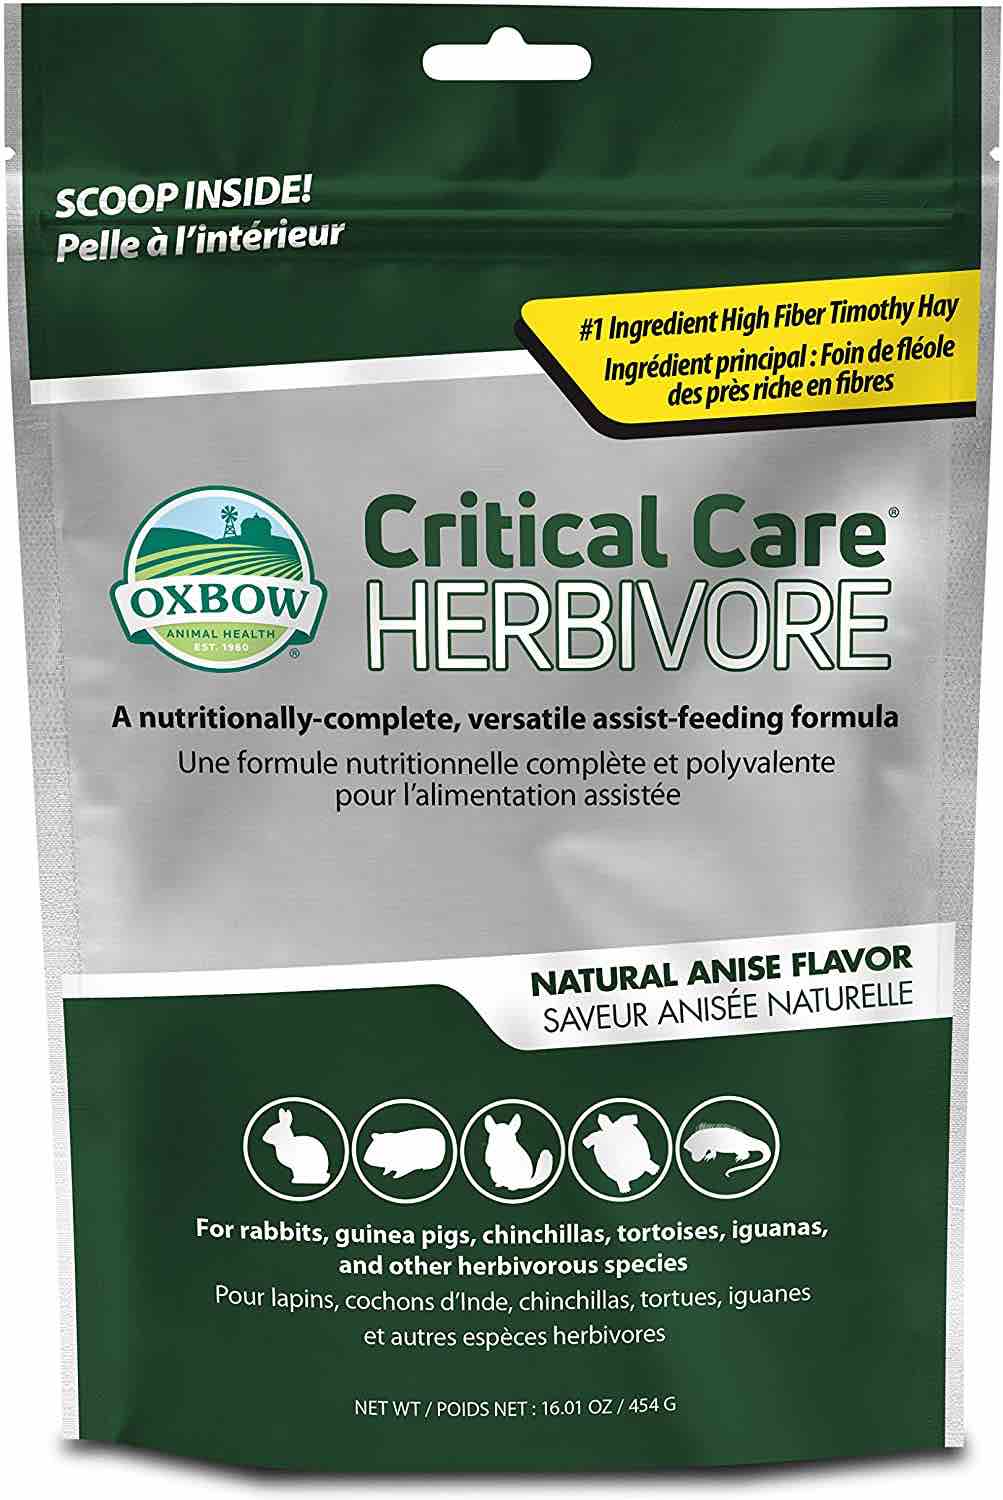 Oxbow Critical Care Herbivore